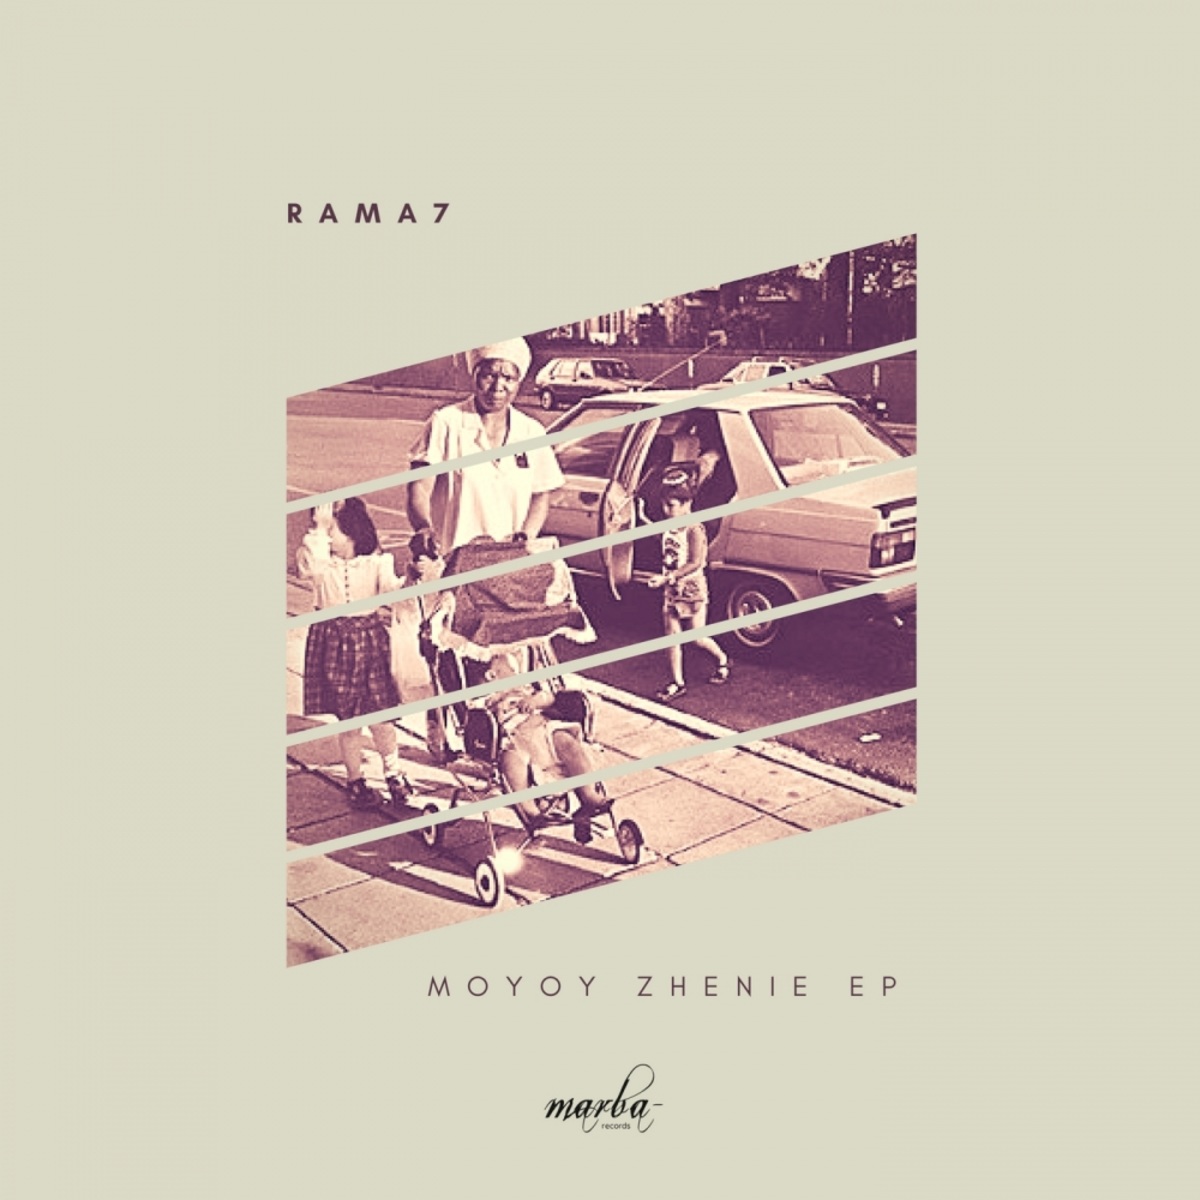 RAMA7 - Moyoy Zhenie EP / Marba Records